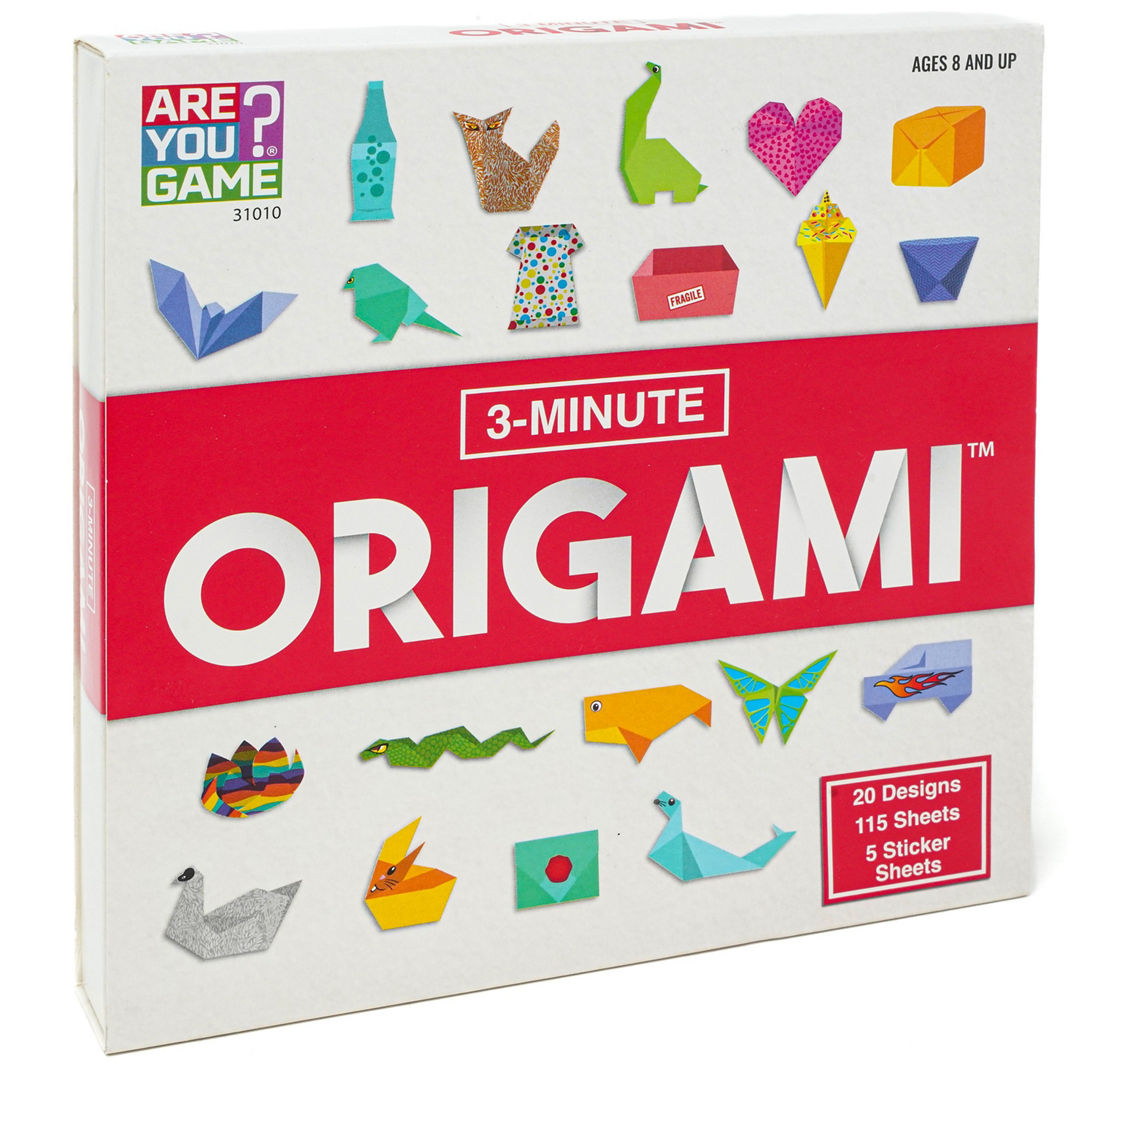 AreYouGame.com 3-Minute Origami - Image 1 of 5